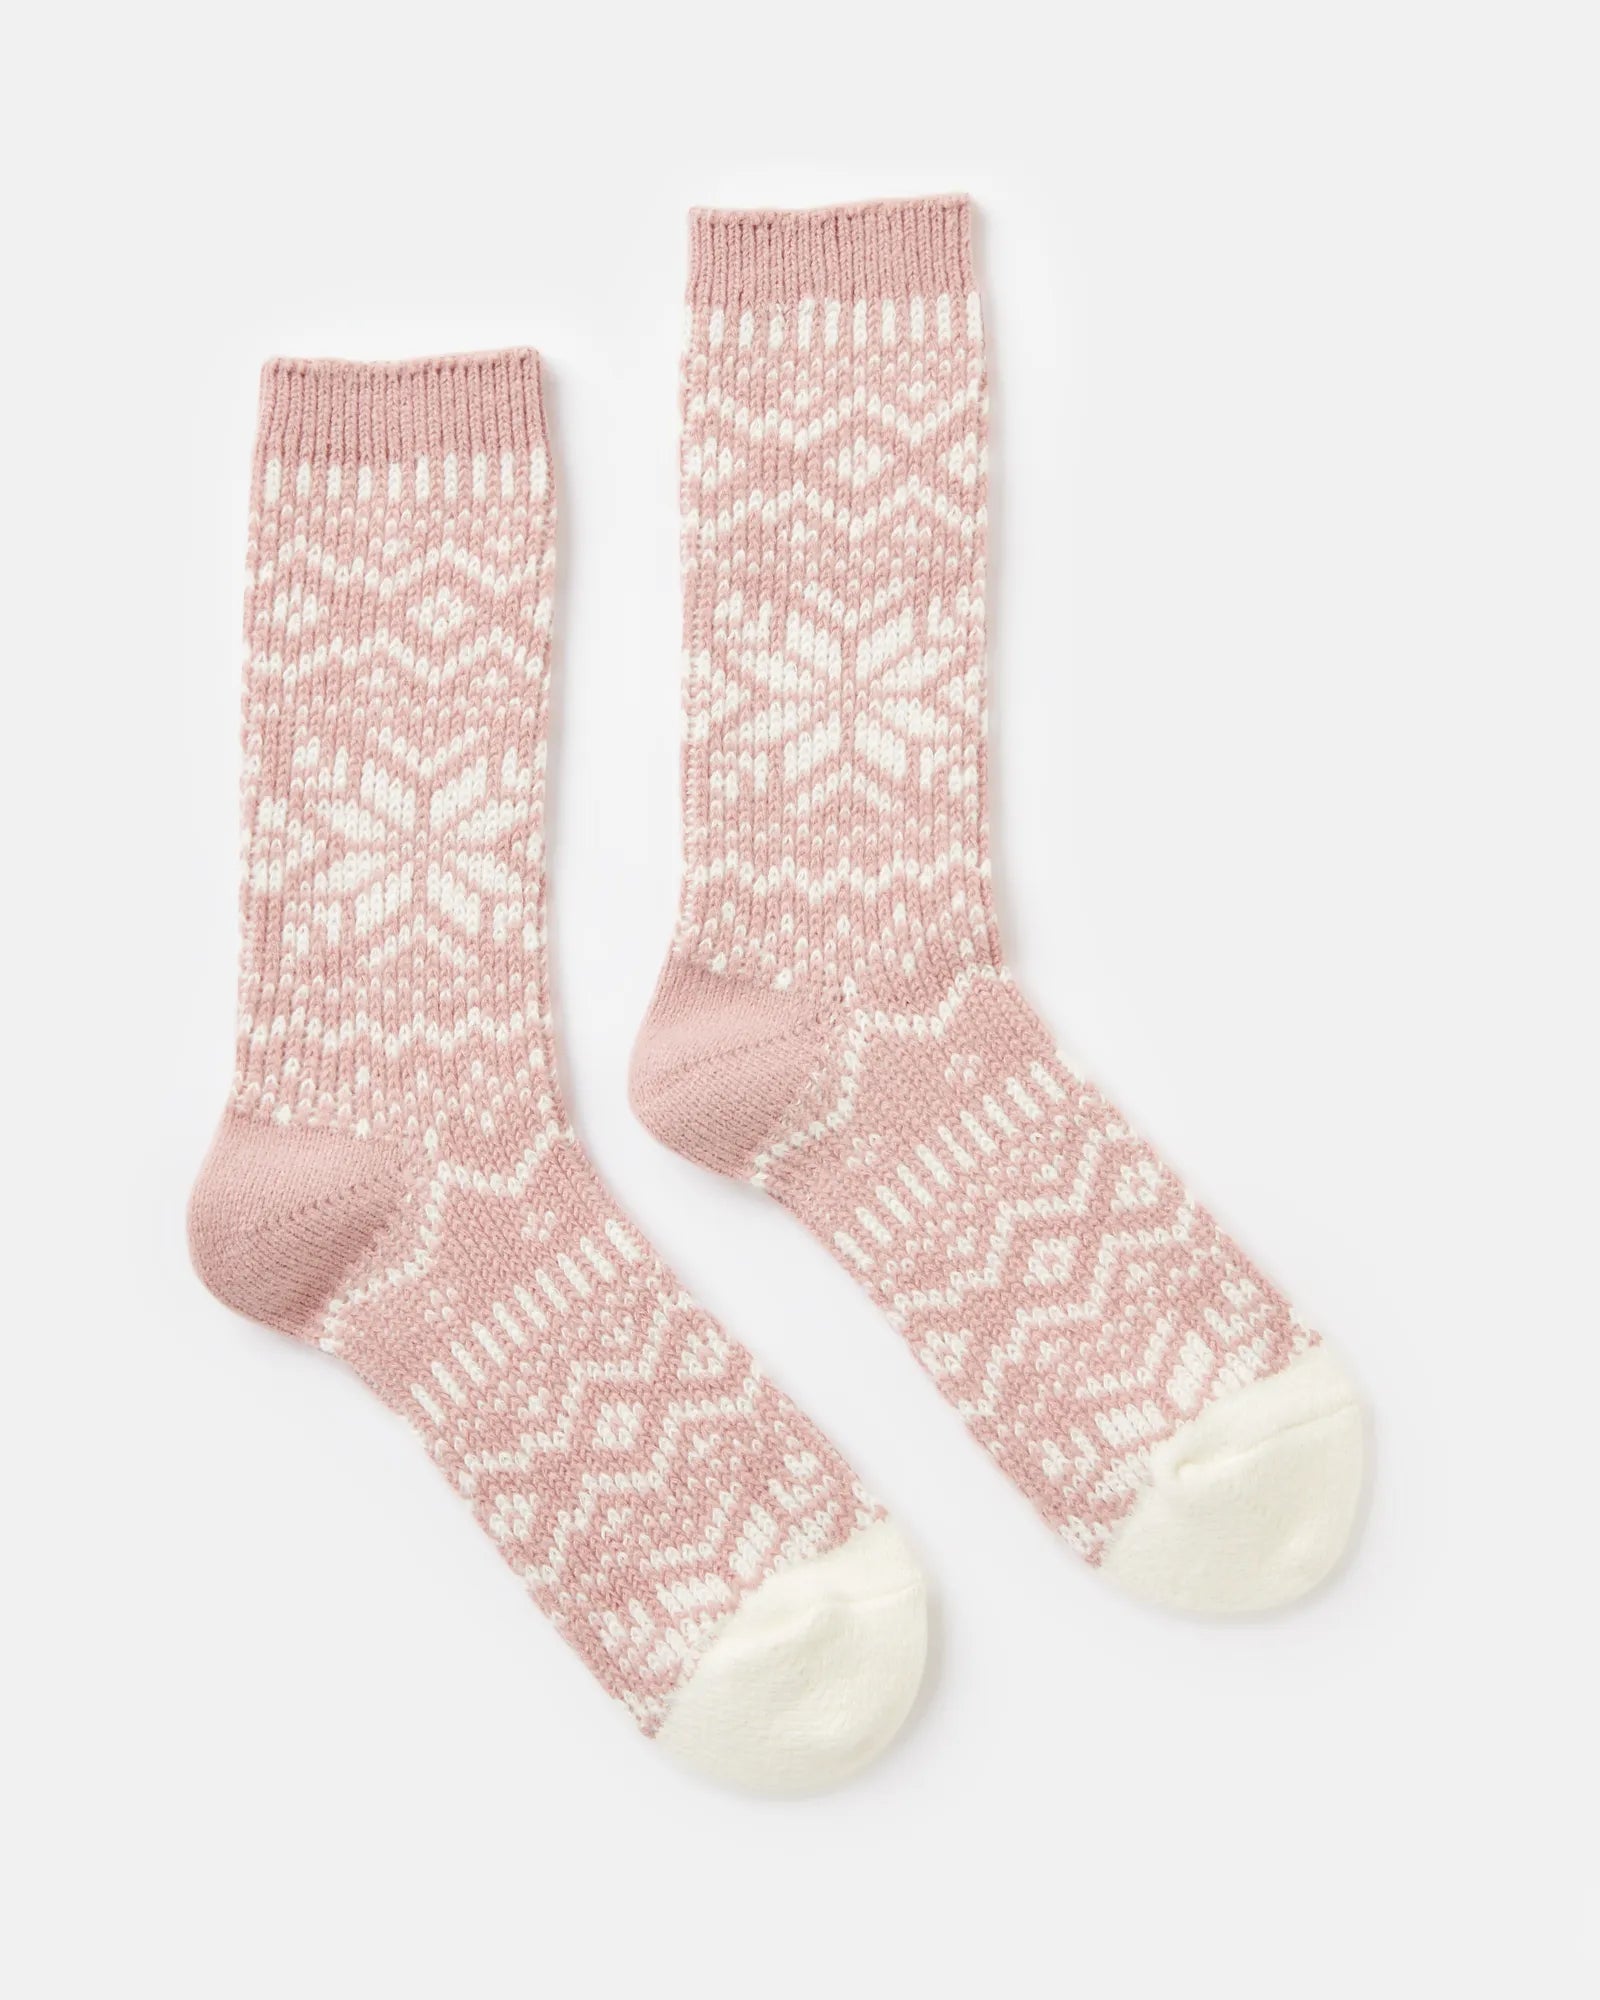 Cosy Pink Fair Isle Socks